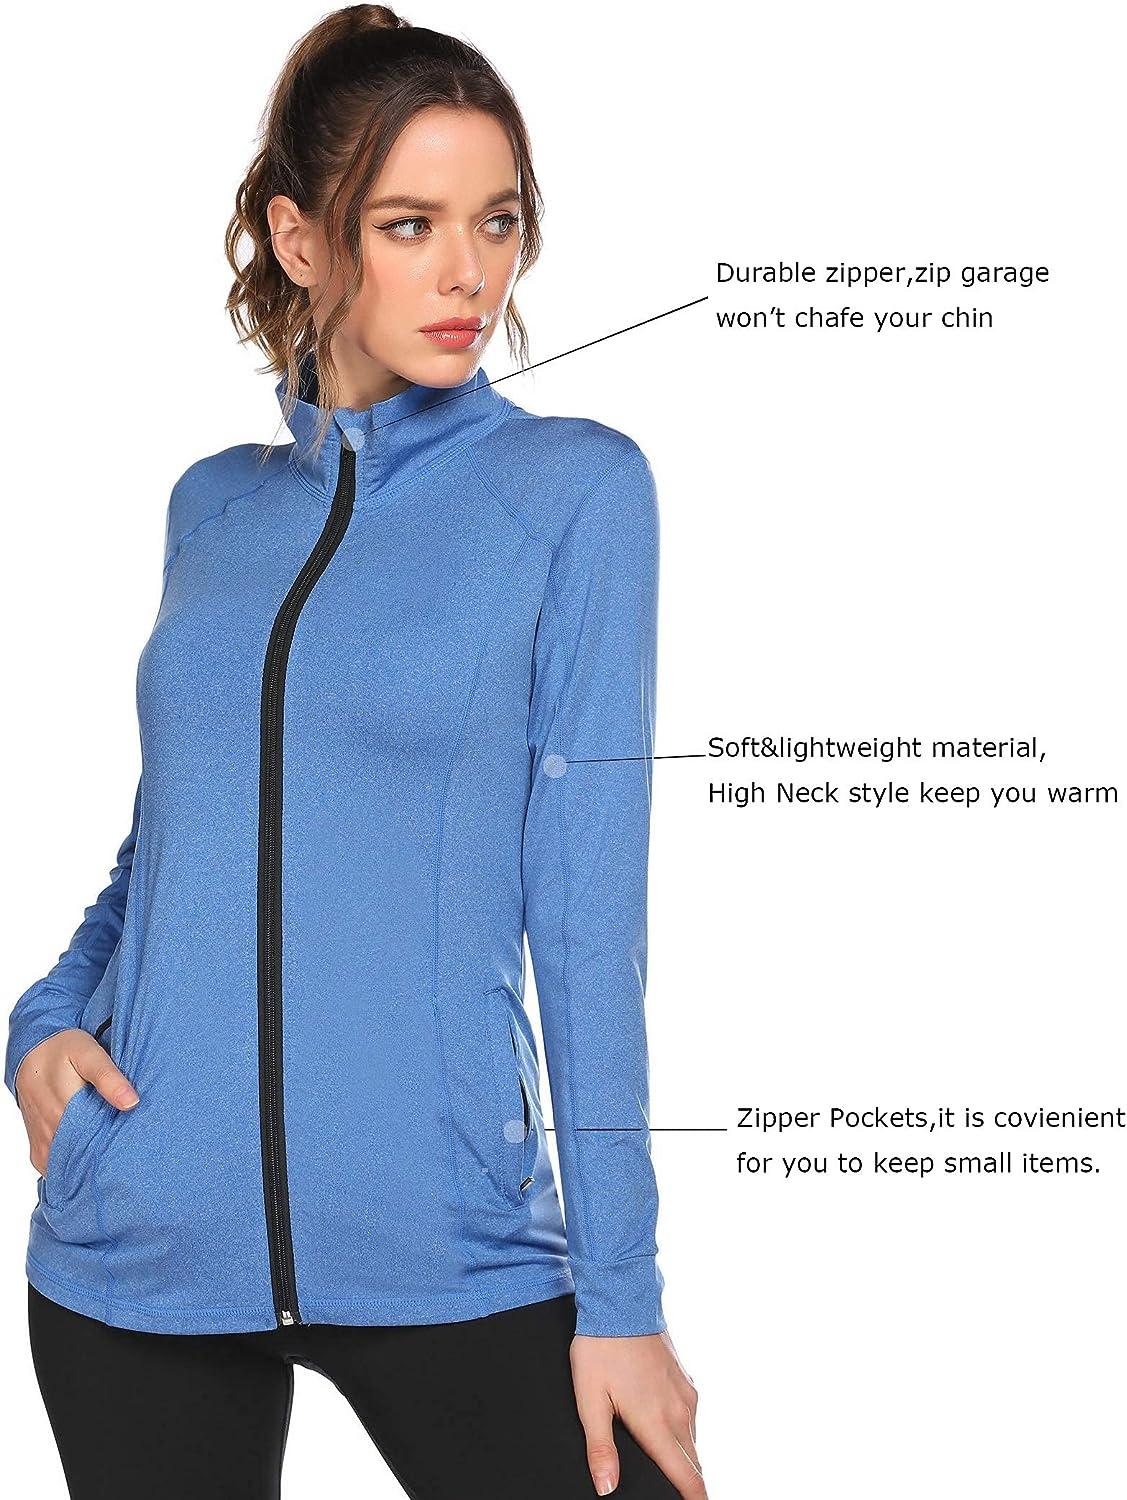 ELESOL Women's Running Jacket Full Zip Workout Jacket Activewear